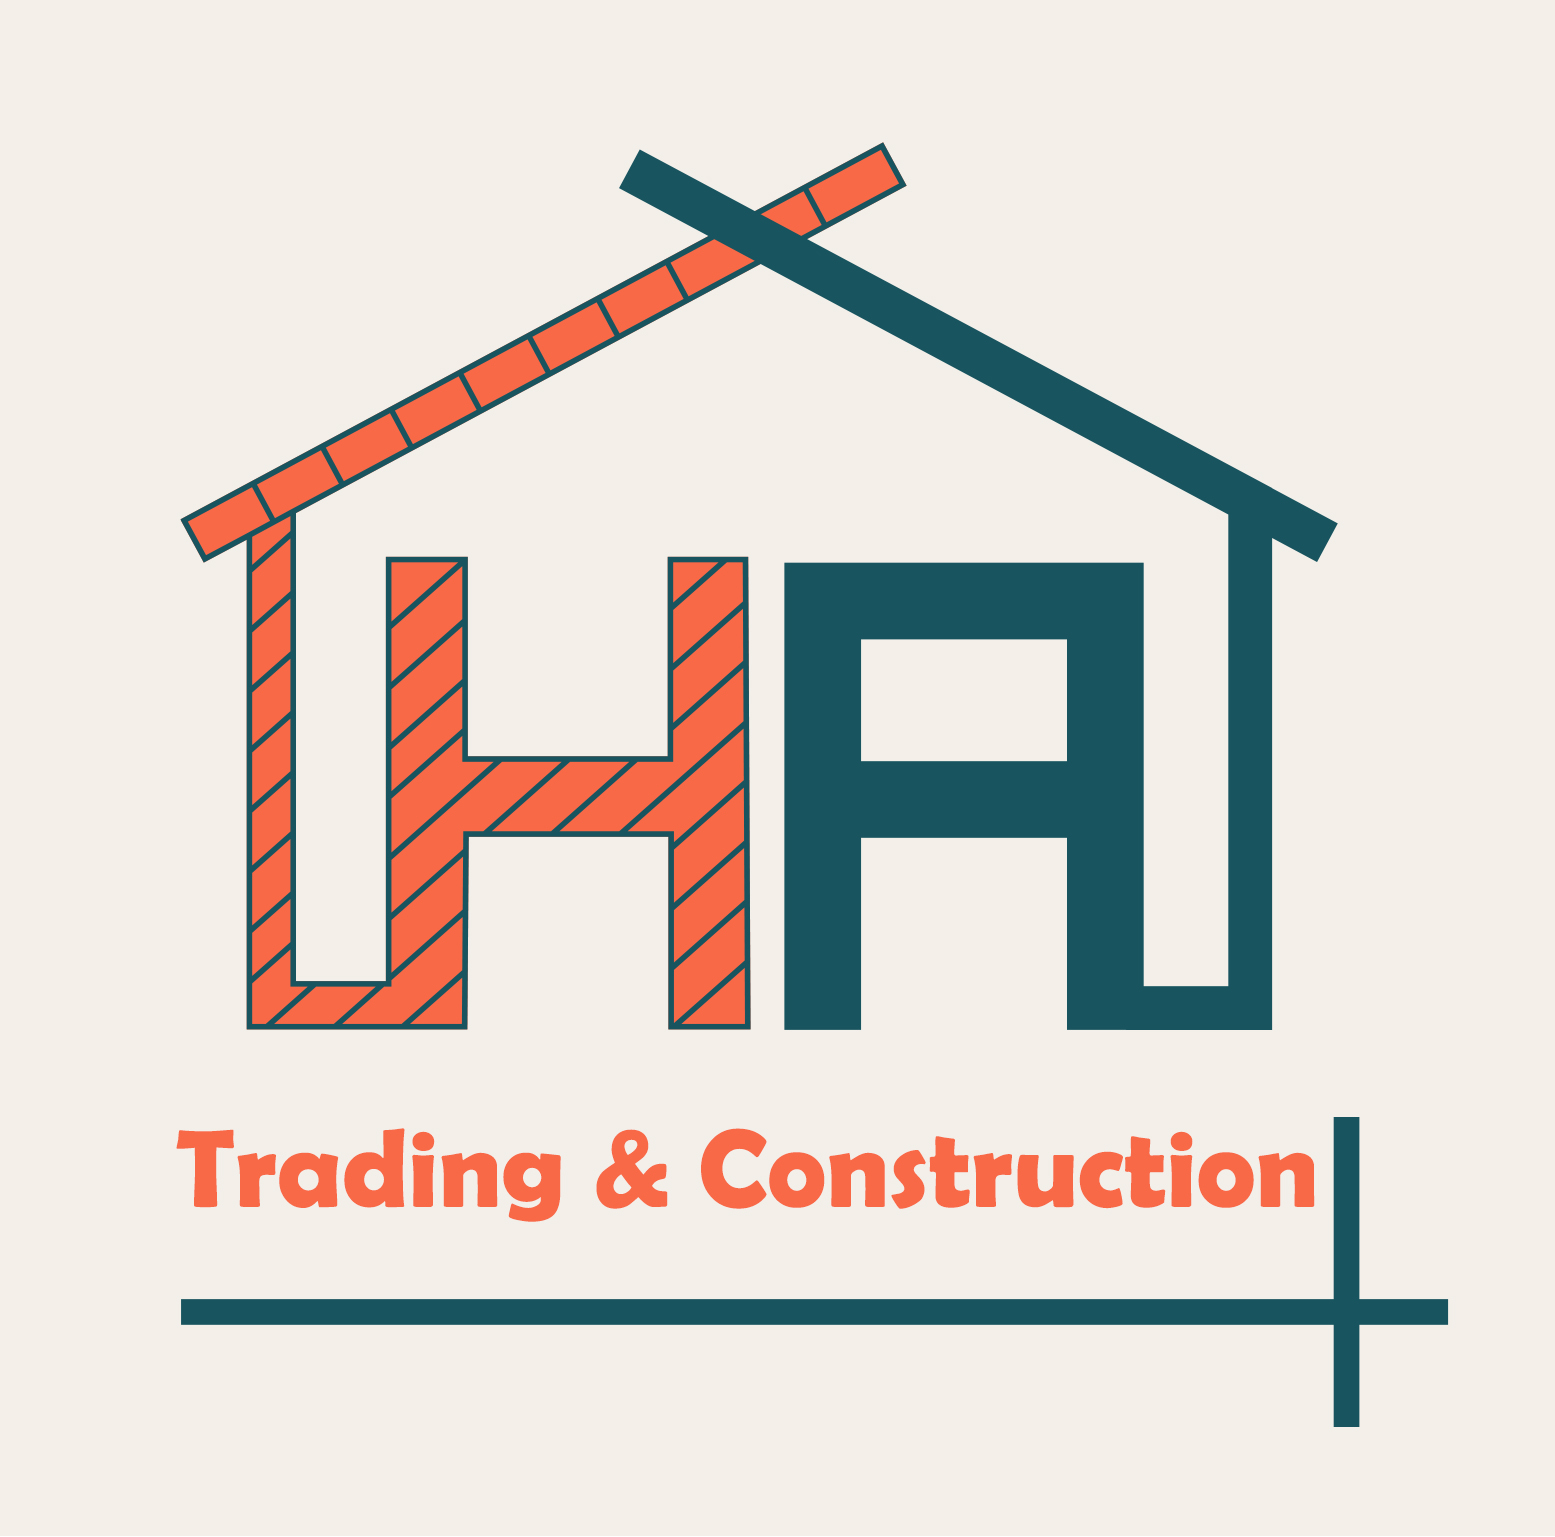 HA – Construction & Trading